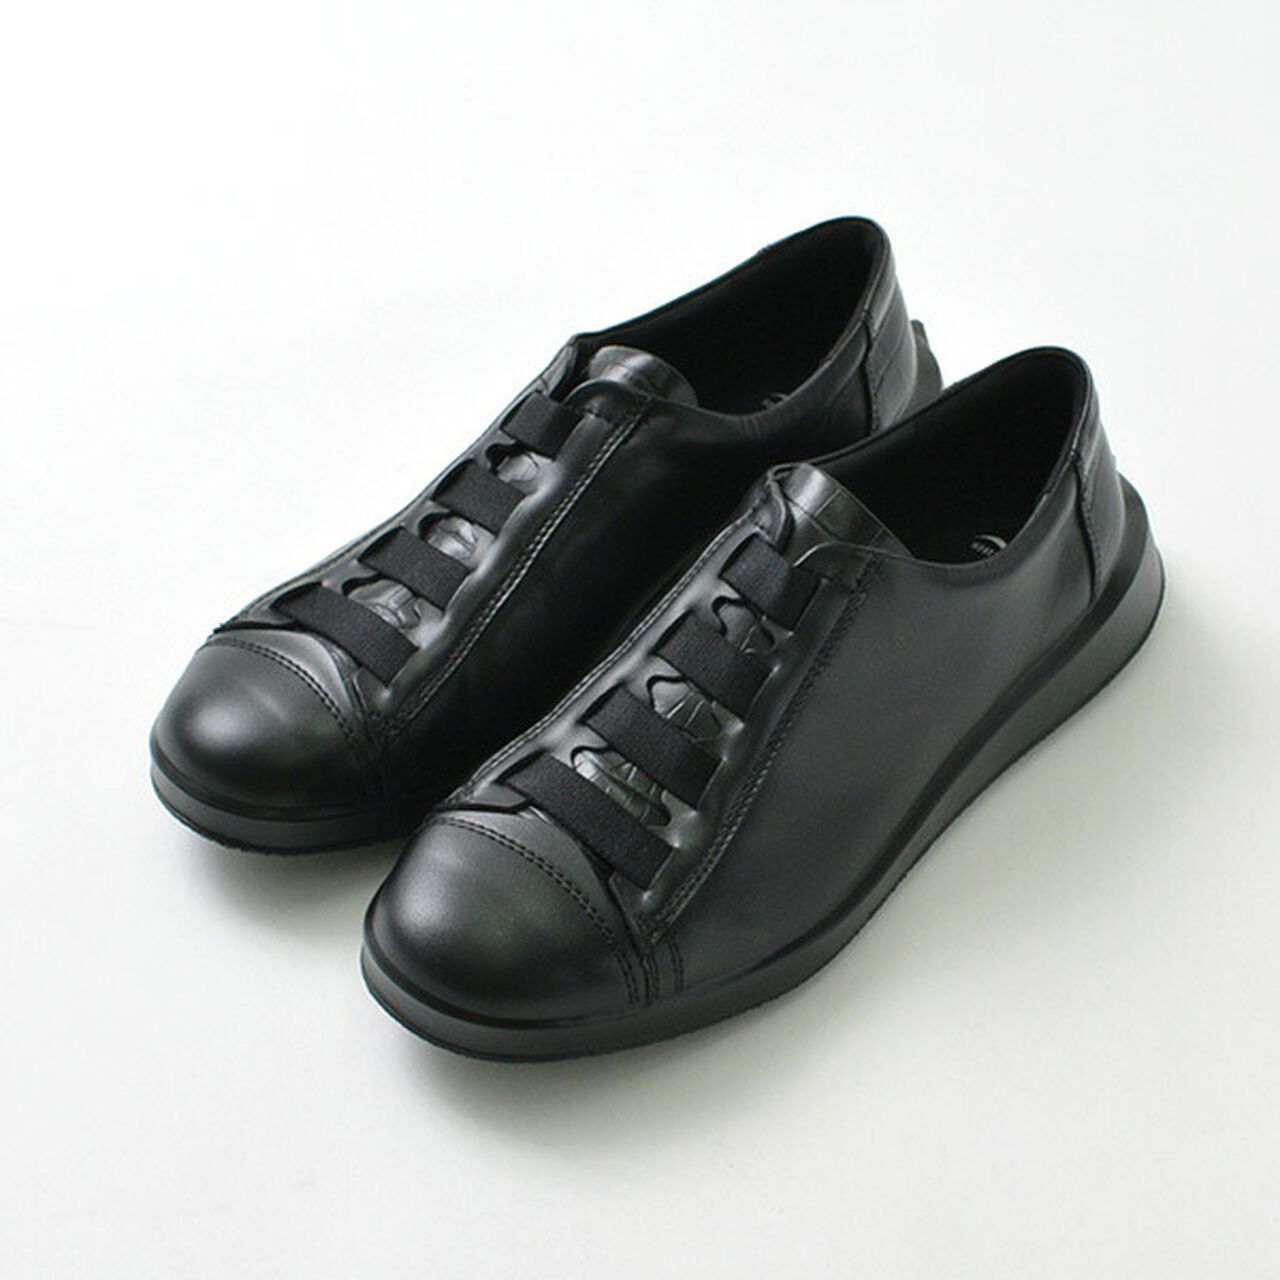 OBI Leather Sneakers,Black, large image number 0